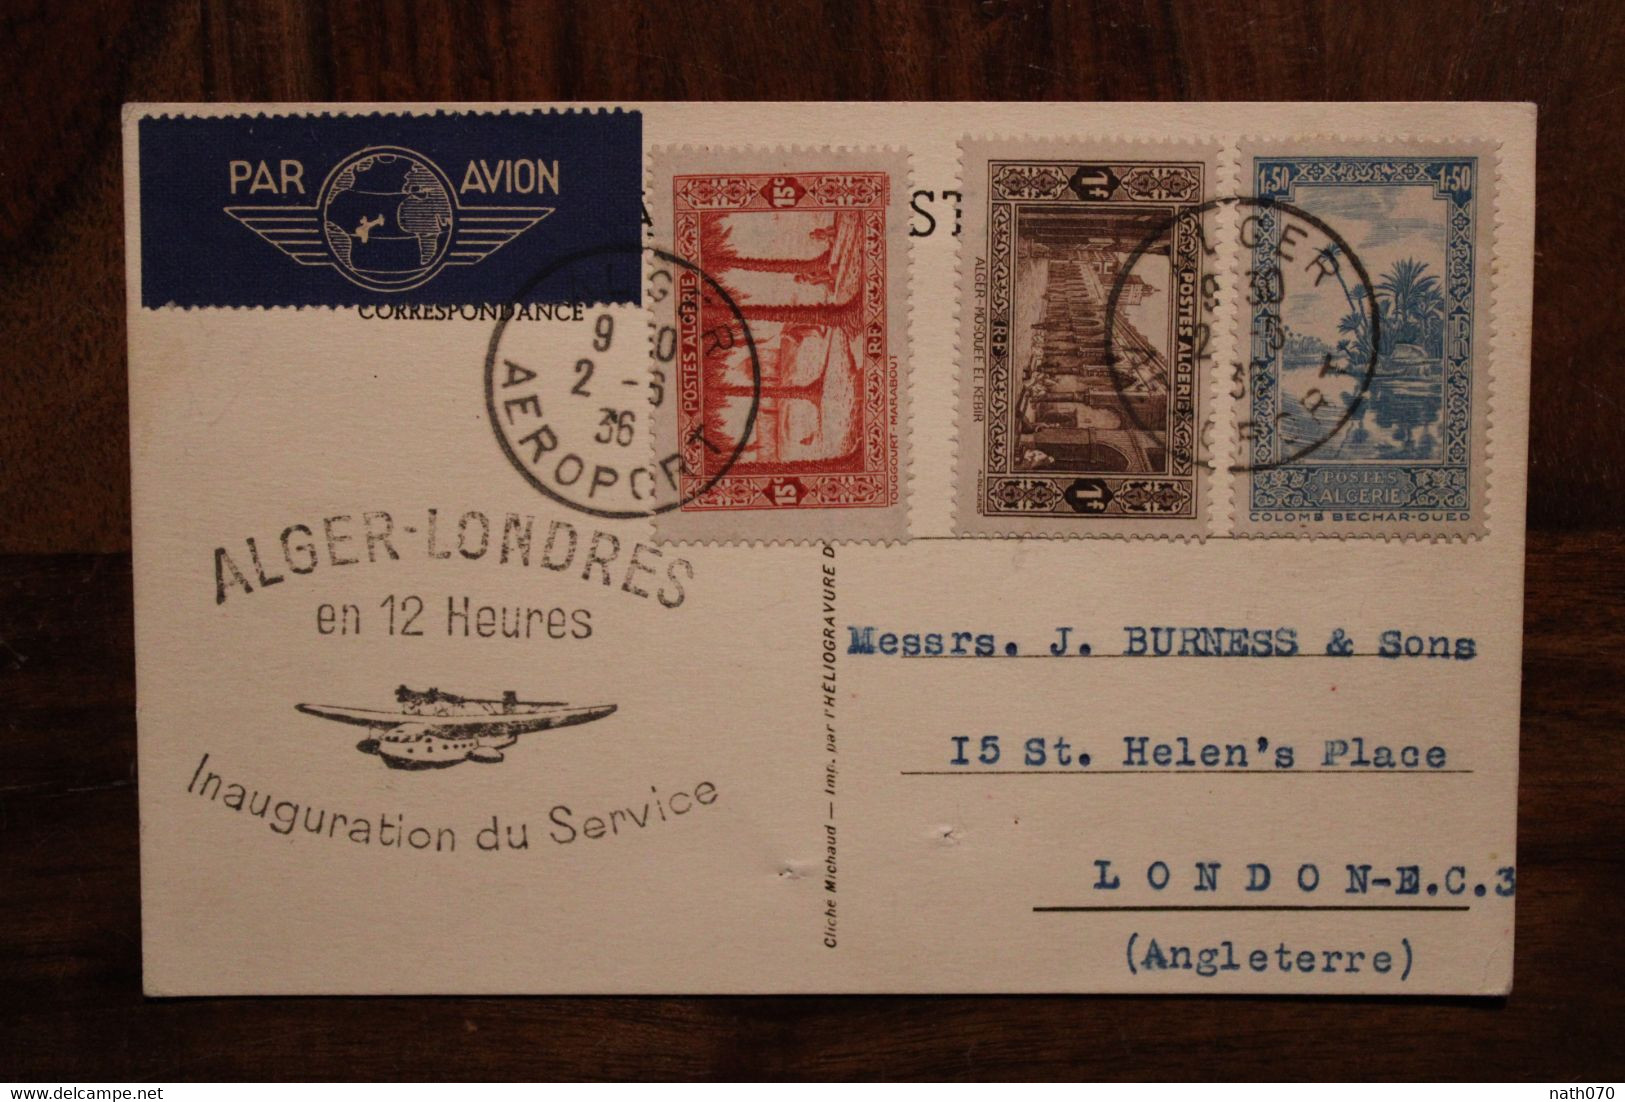 Cpa 1936 Alger Londres En 12 Heures Inauguration Du Service Air Mail Cover Mit Luftpost Par Avion Flugpost Hydravion - Covers & Documents